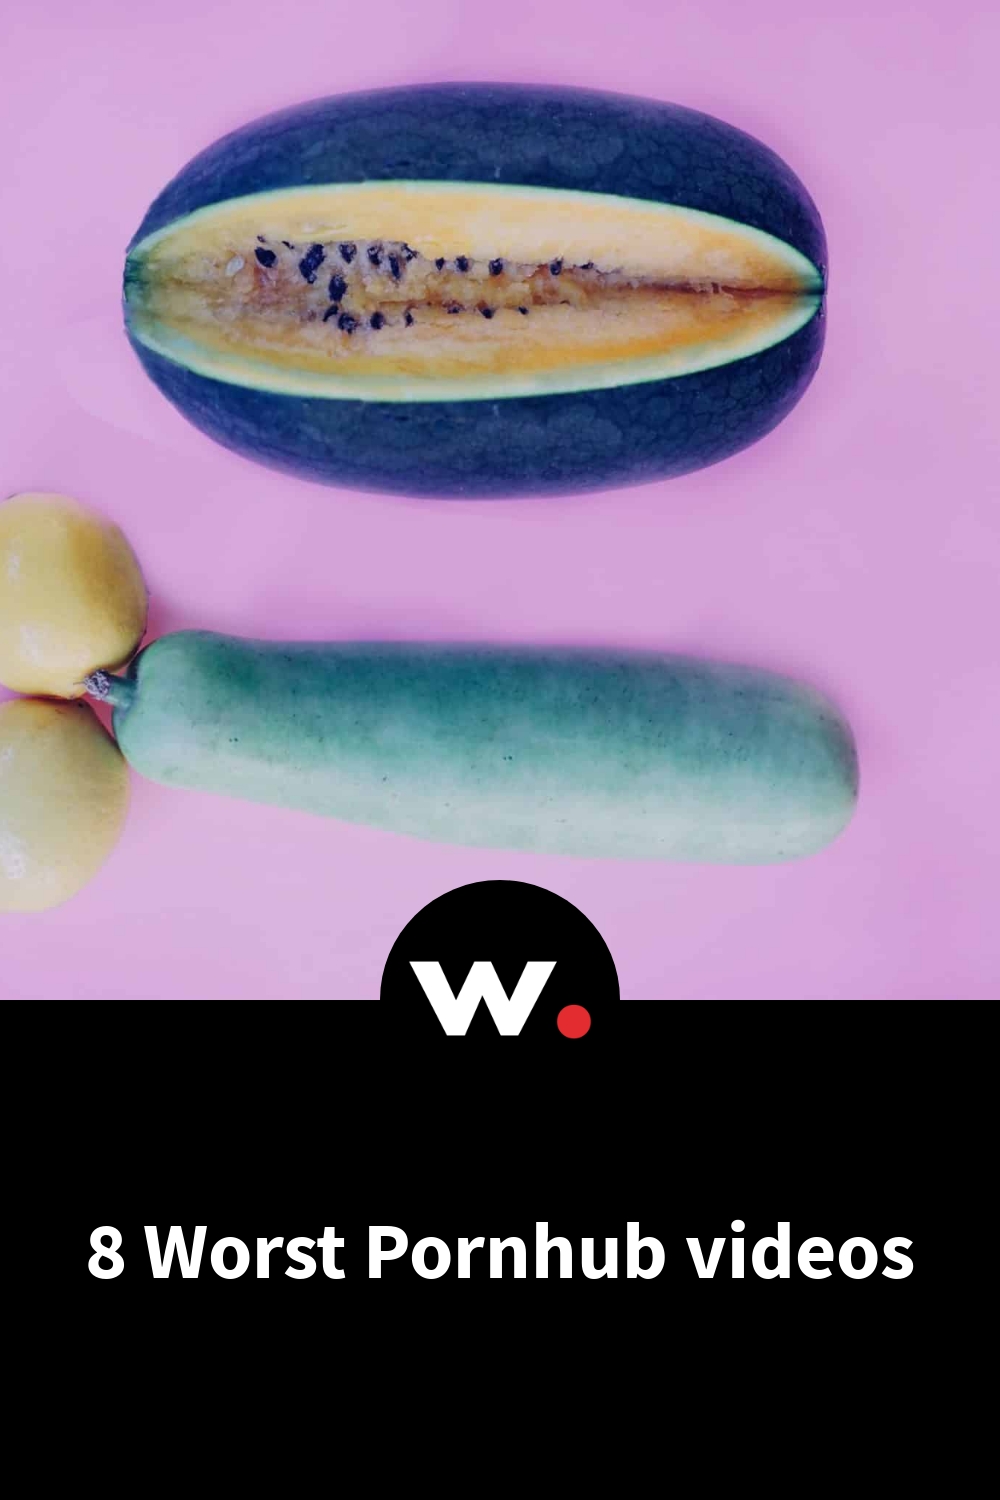 8 Worst Pornhub videos